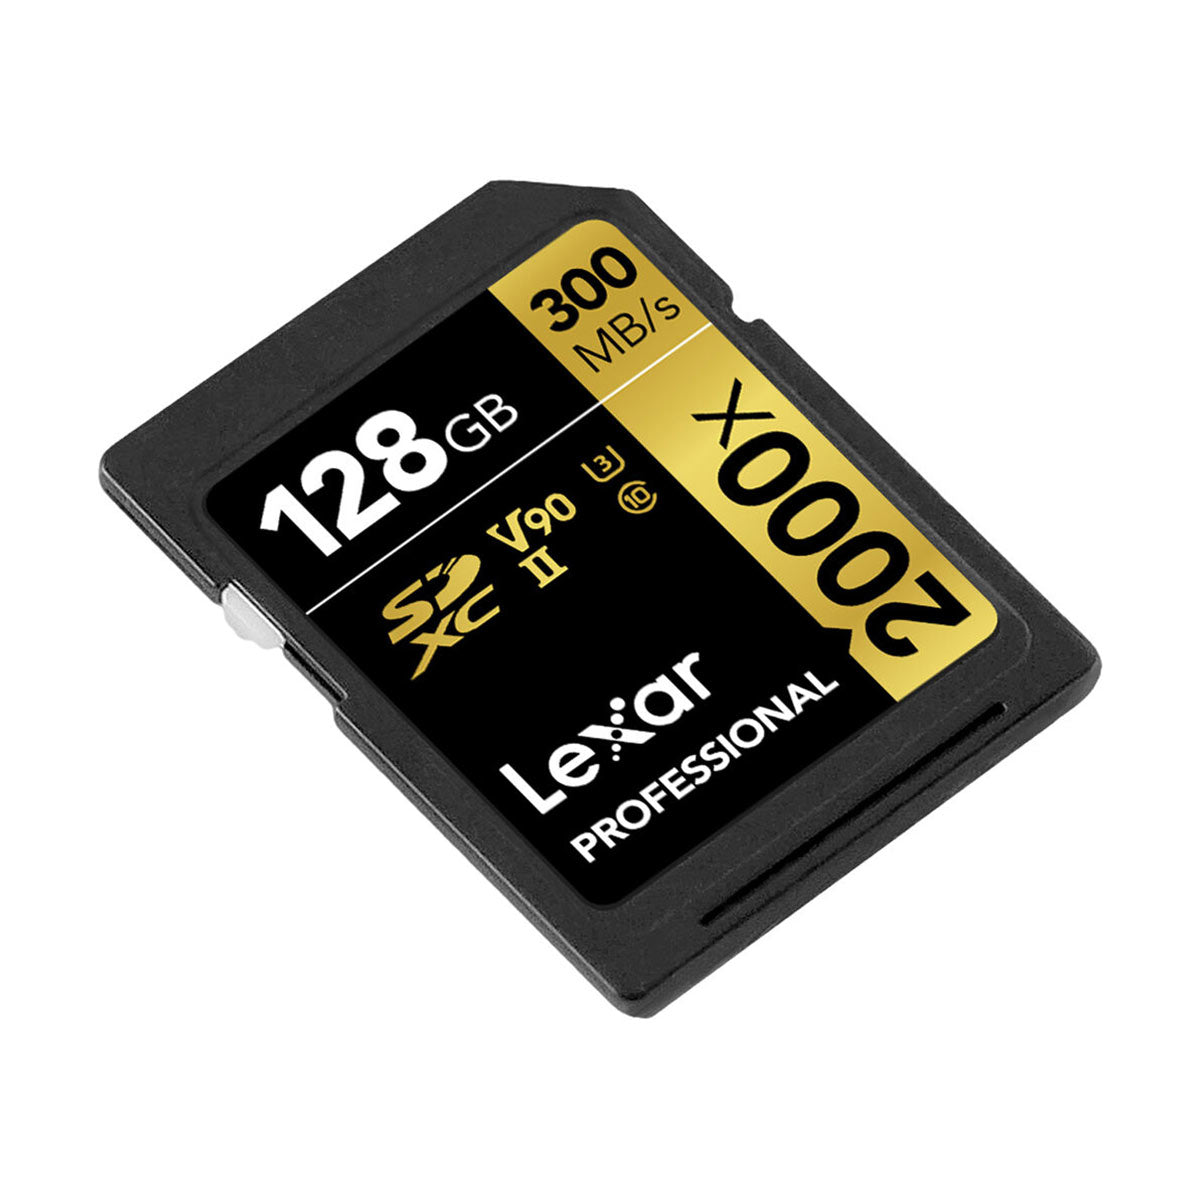 Lexar 128GB Professional 2000x UHS-II SDXC (V90) Memory Card